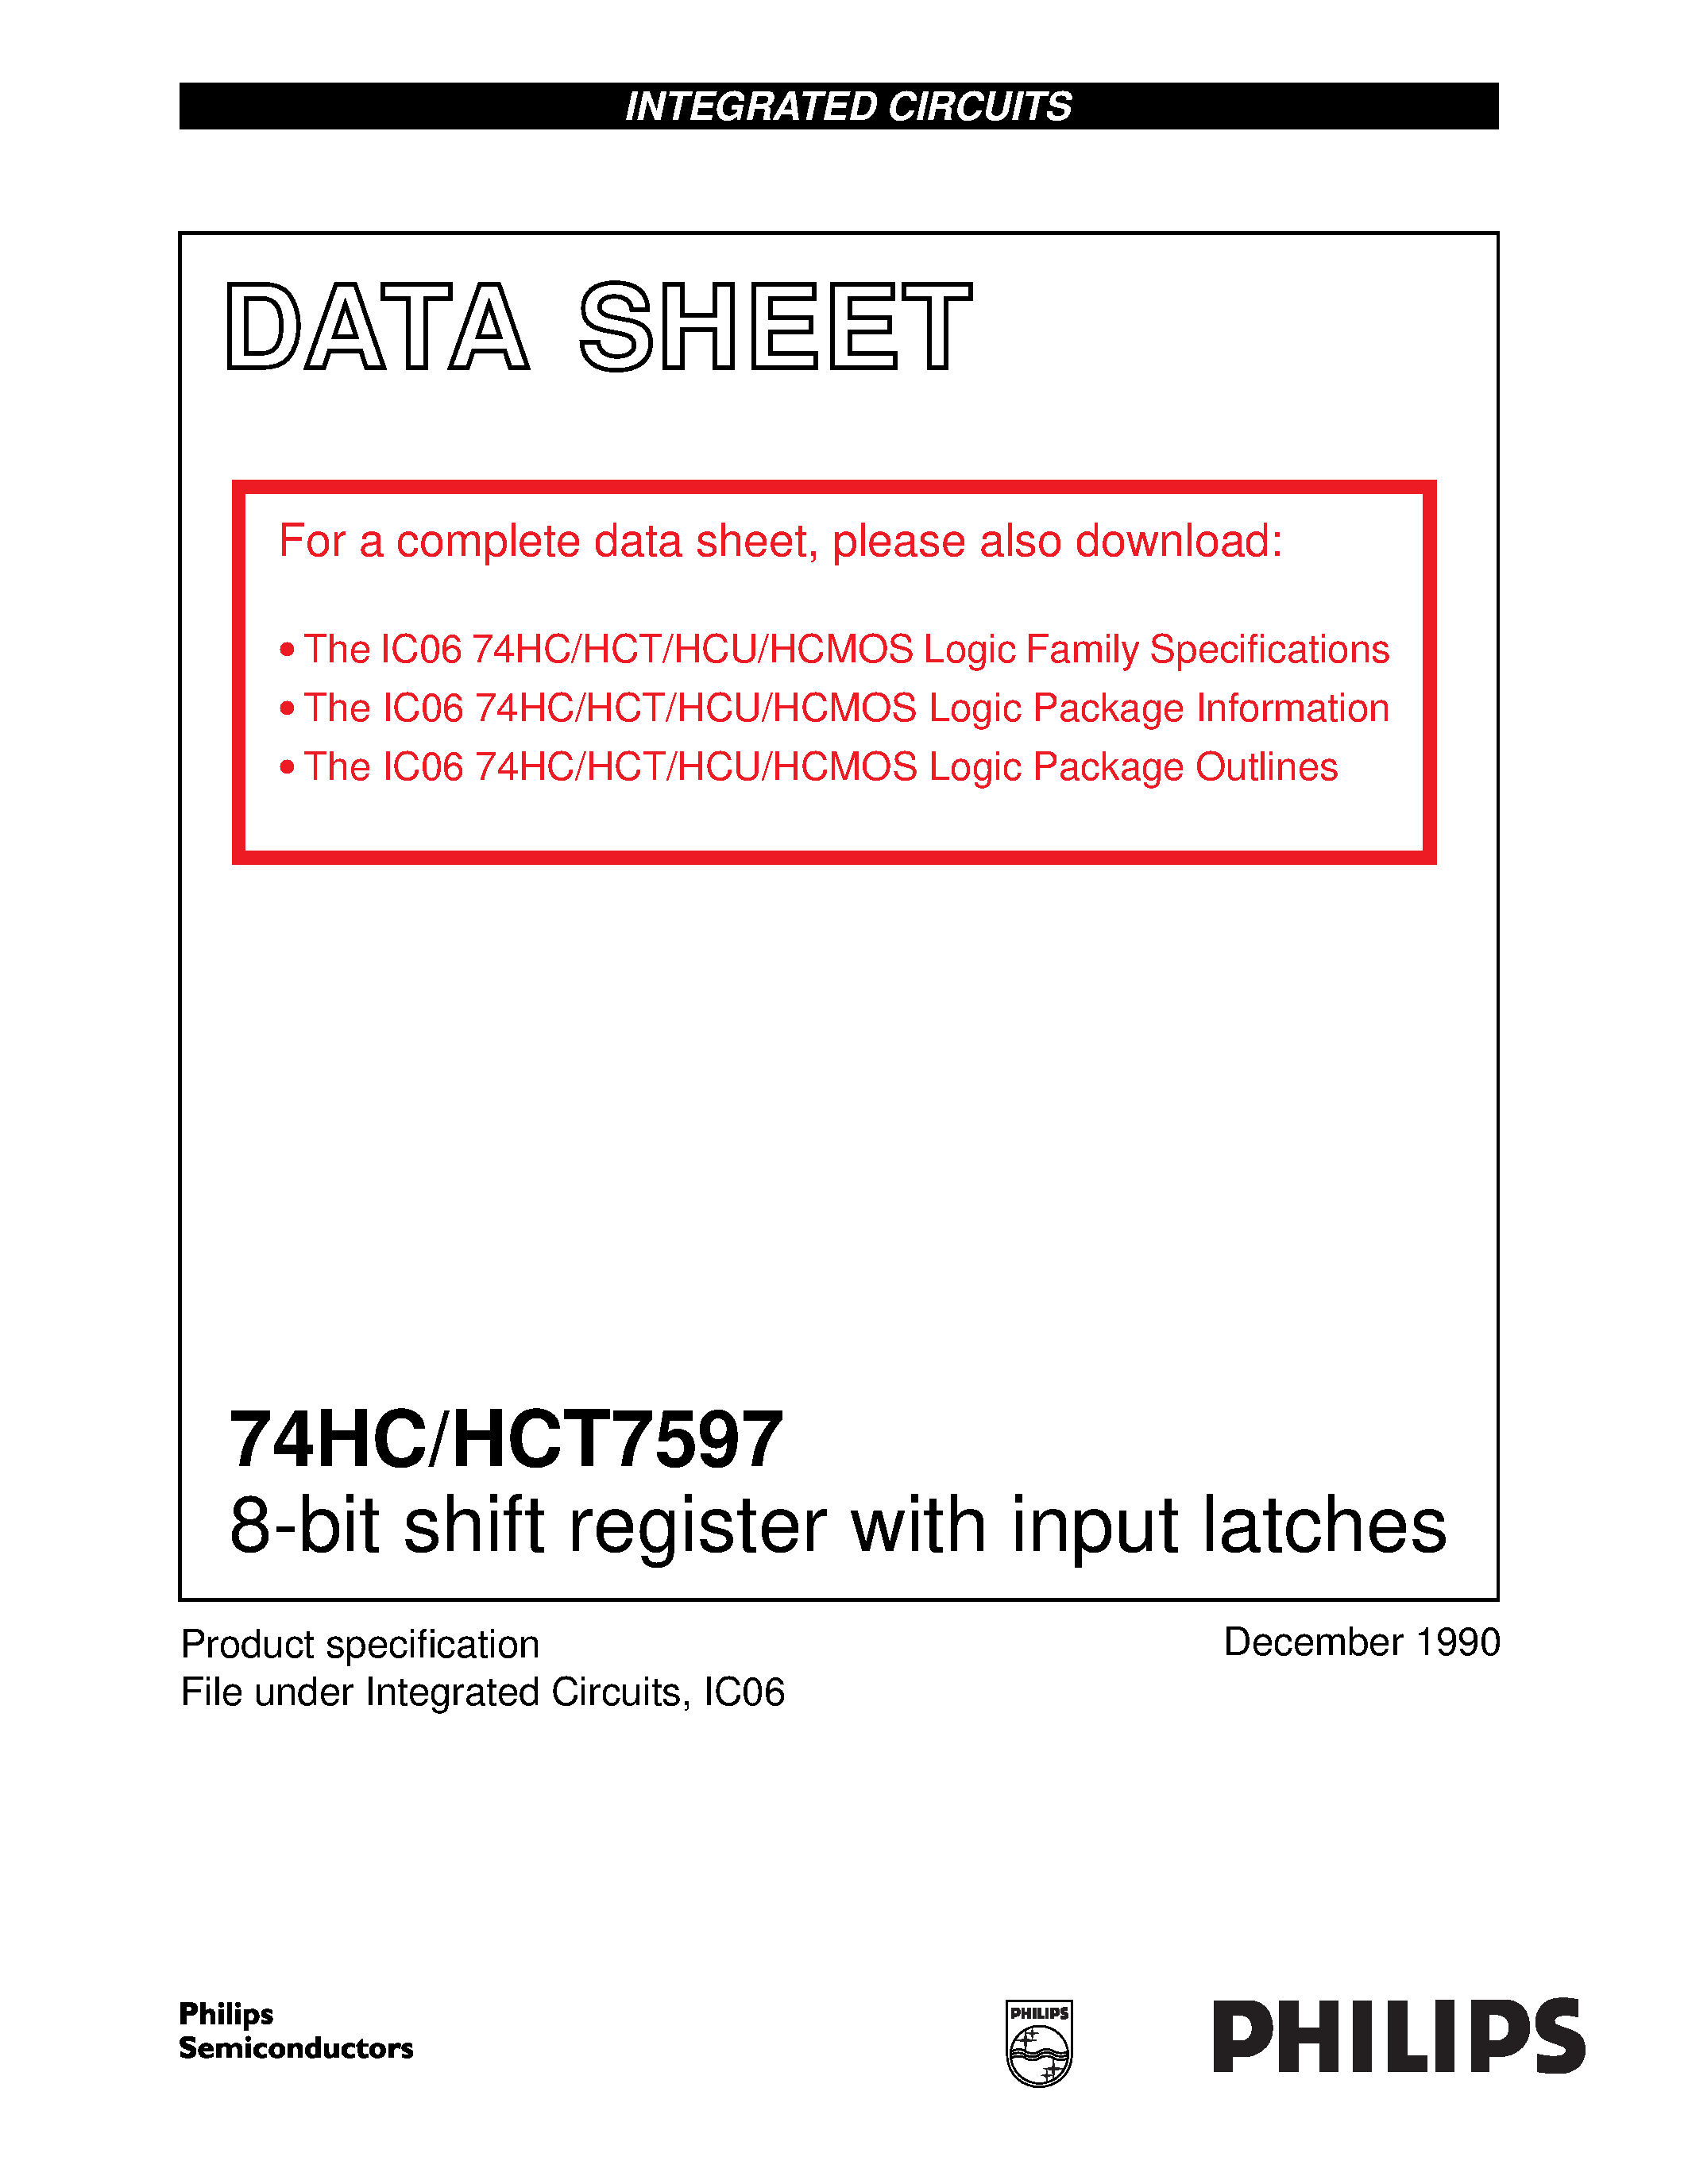 Даташит 74HCT7597 - 8-bit shift register with input latches страница 1